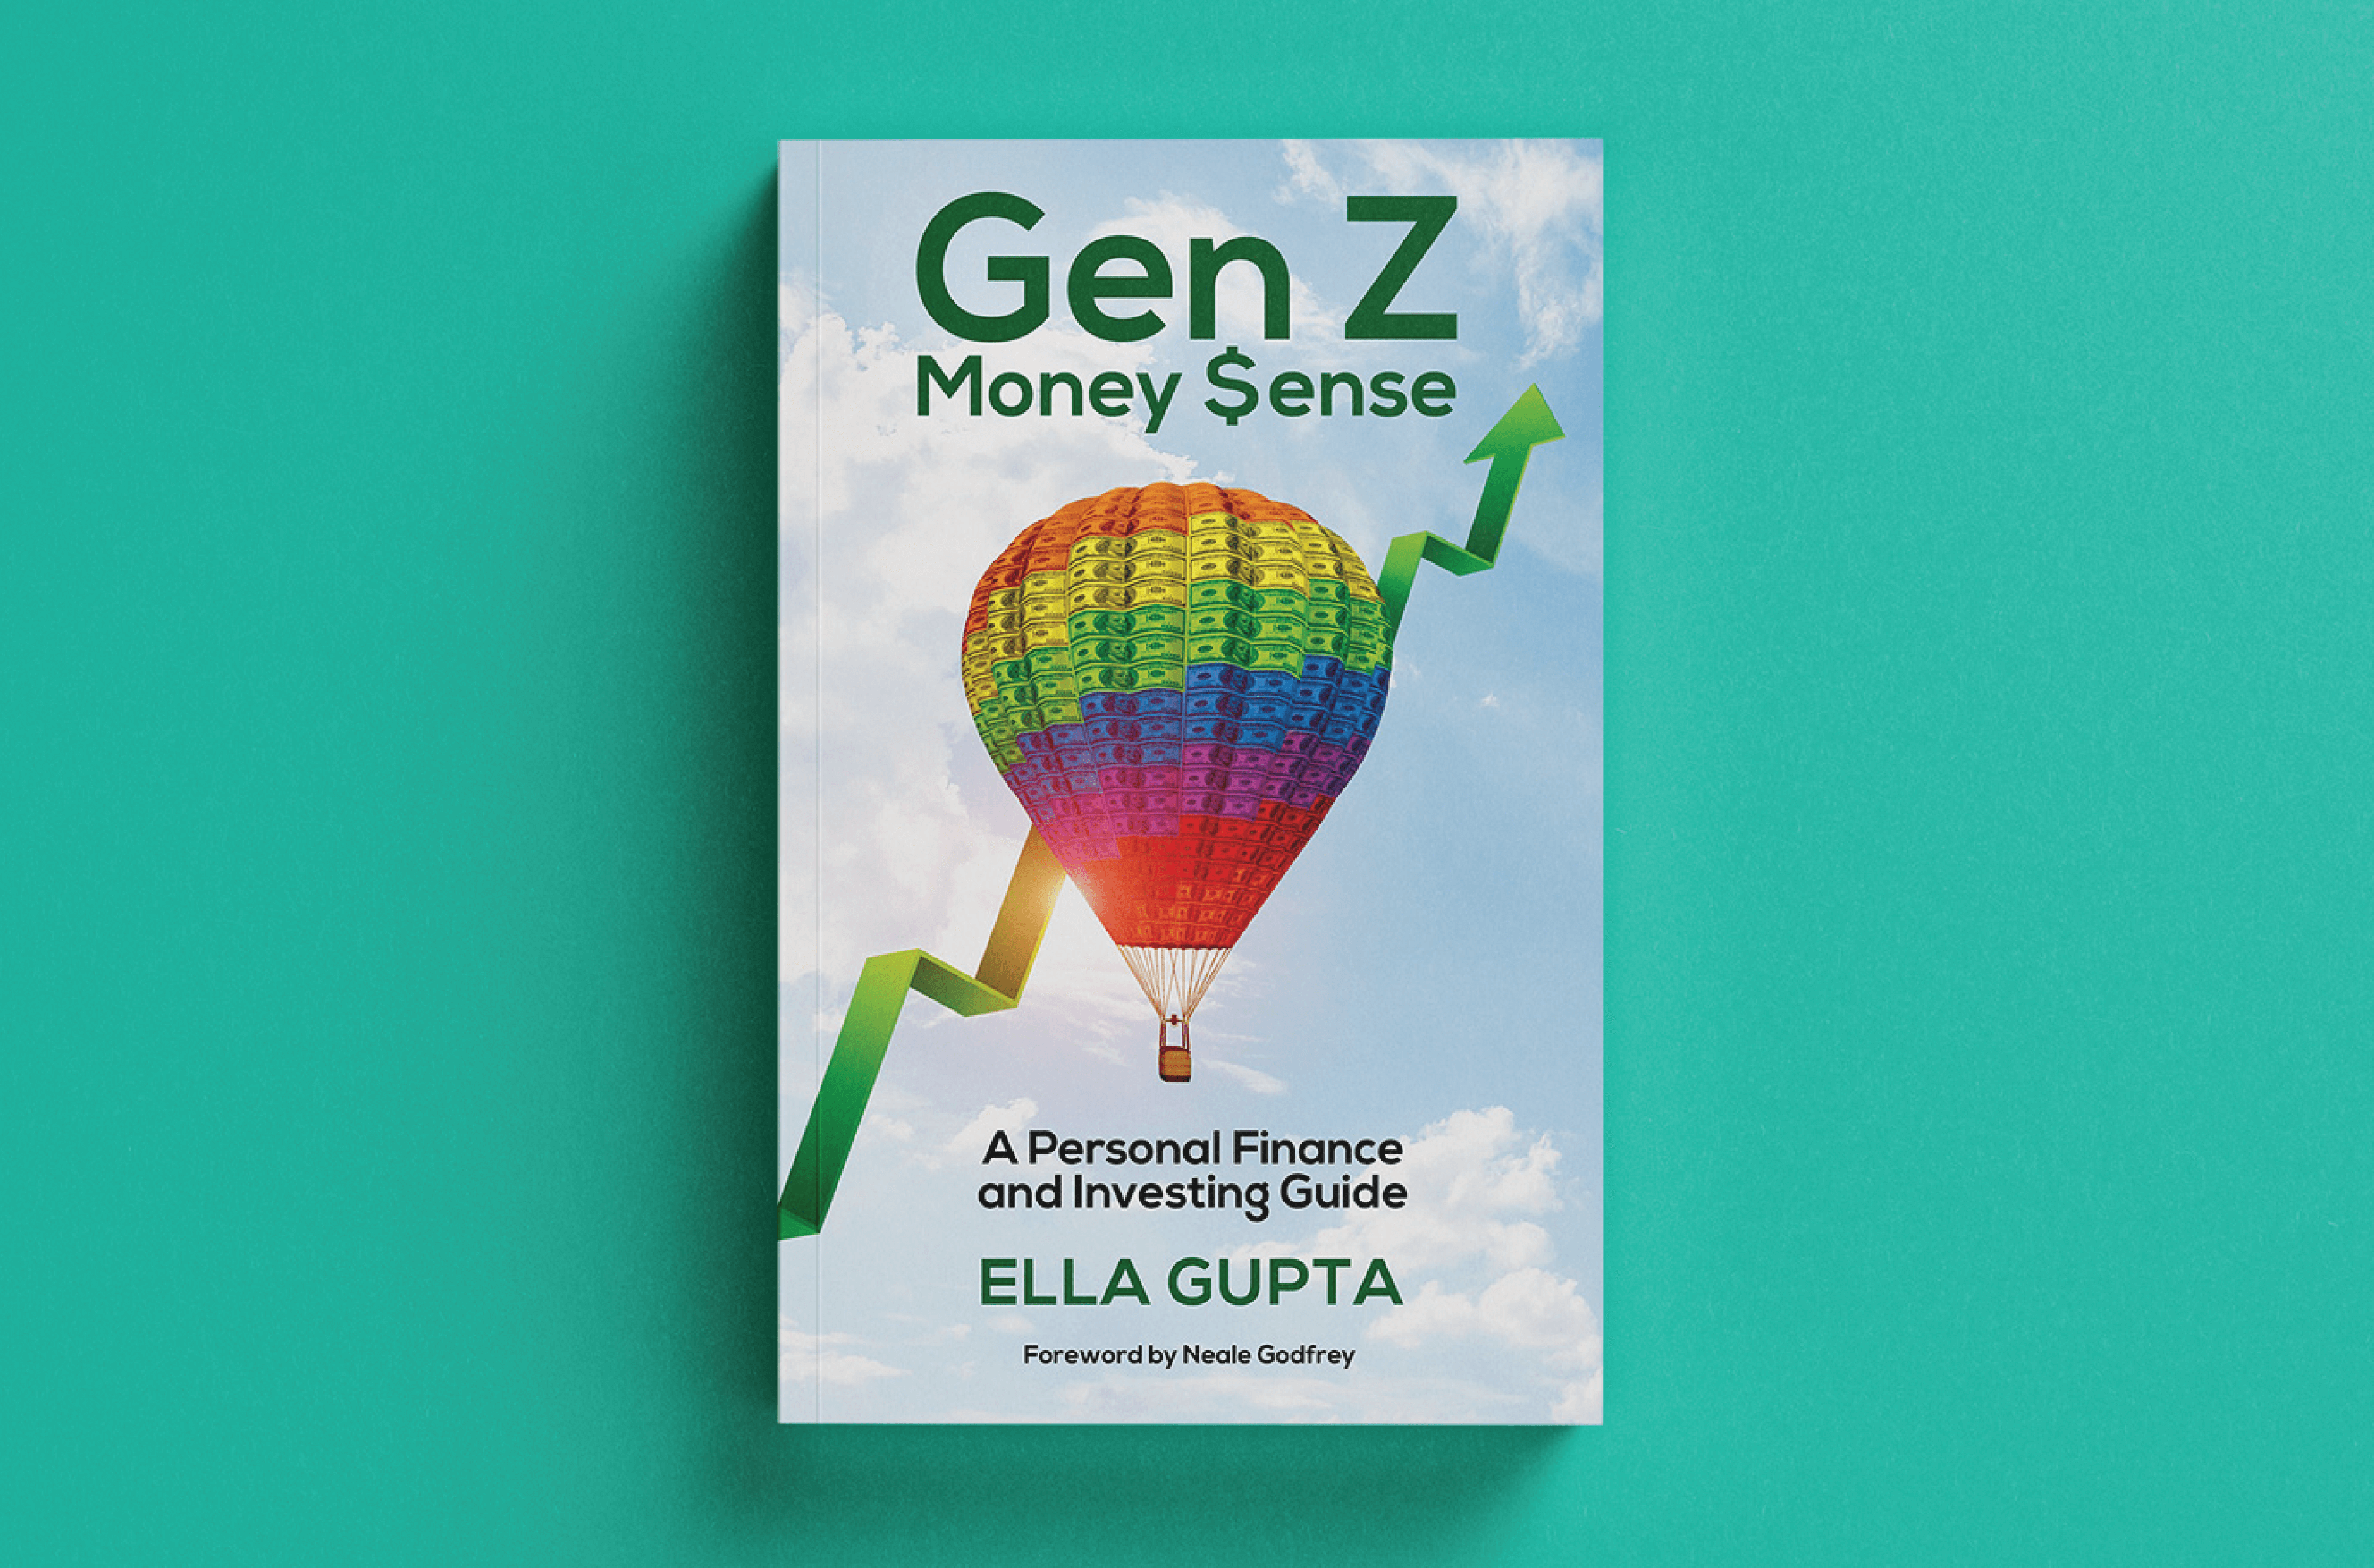 Gen Z Money Sense book by Ella Gupta